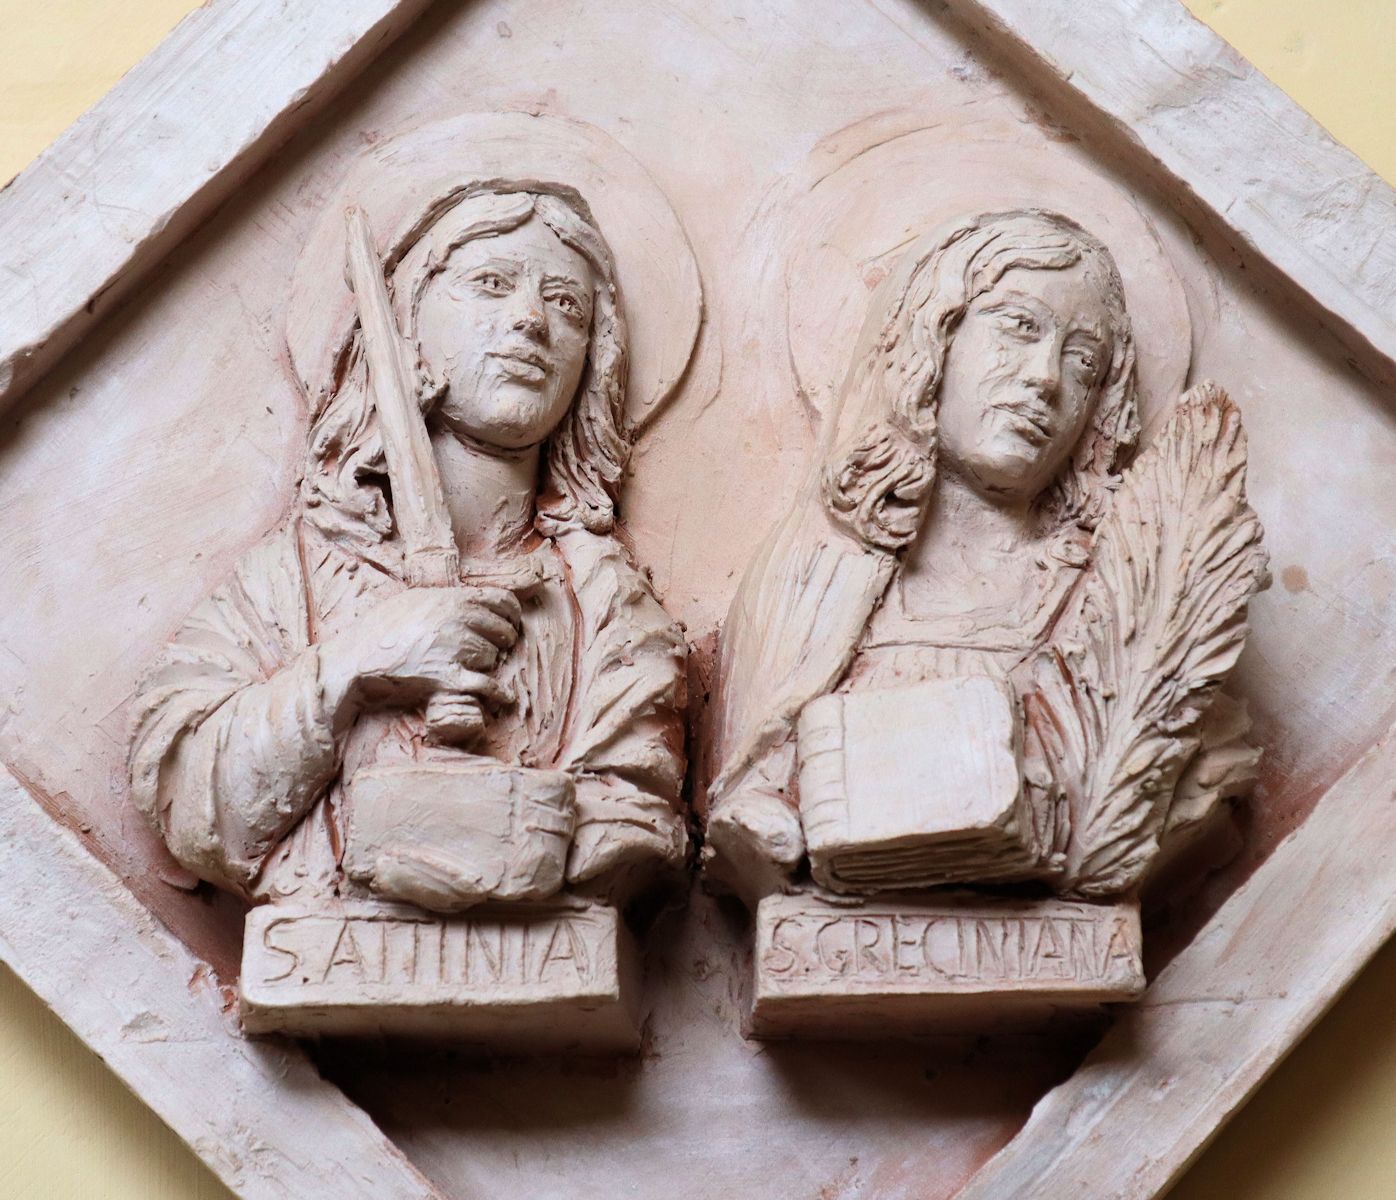 Roberto Chiti und Giorgio Finazzo: Terracottarelief, 2019, im Kreuzgang der Kathedrale in Volterra